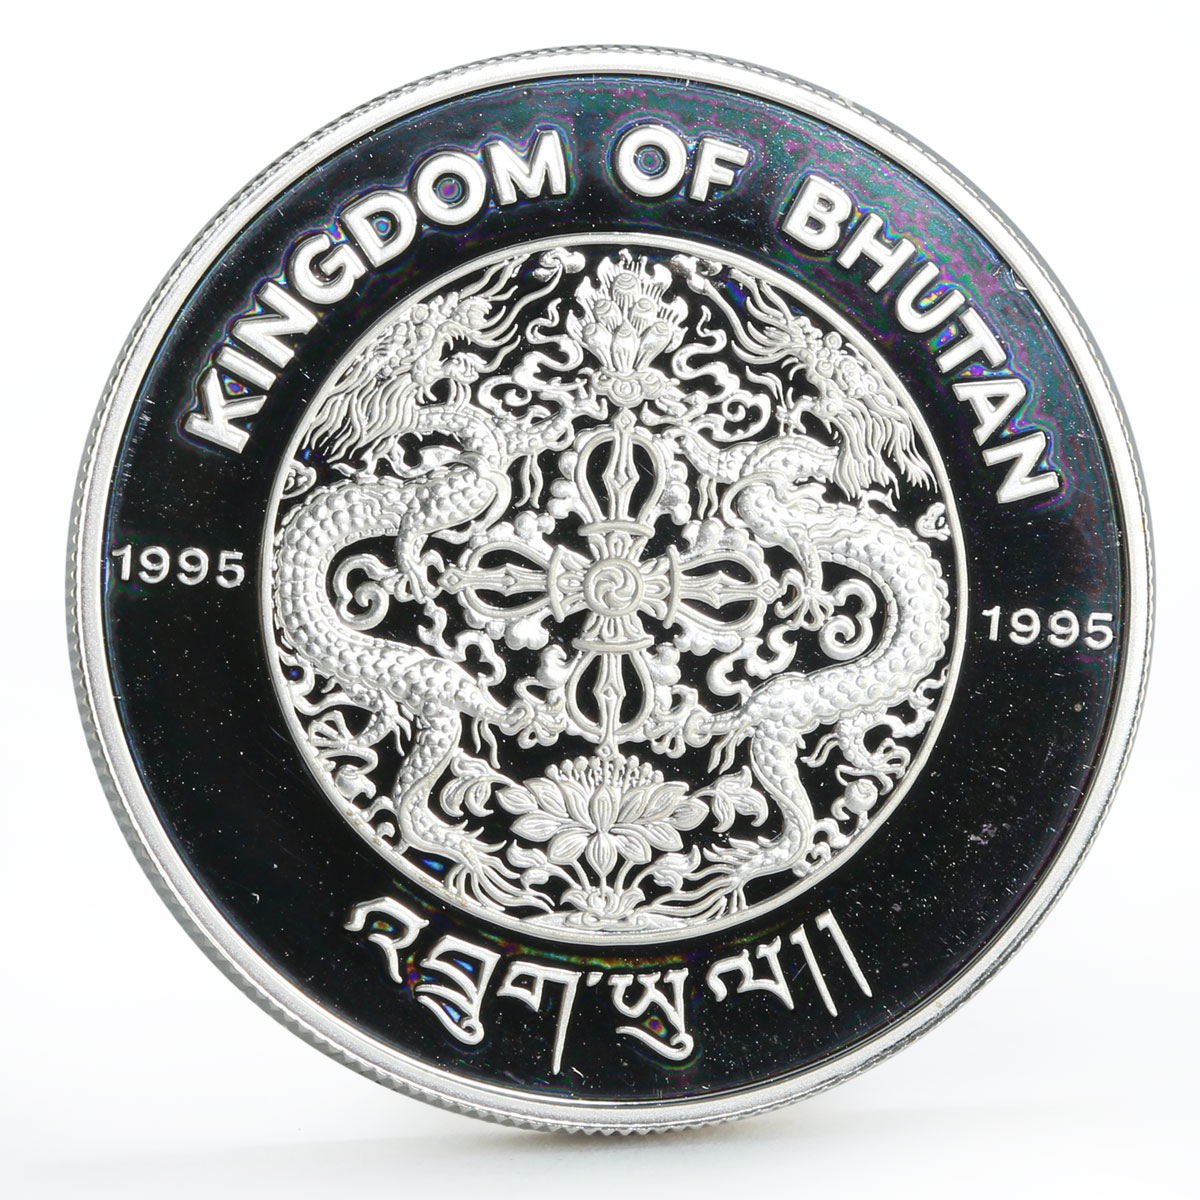 Bhutan 300 ngultrums St. Paul's Walden Bury Palace proof silver coin 1995